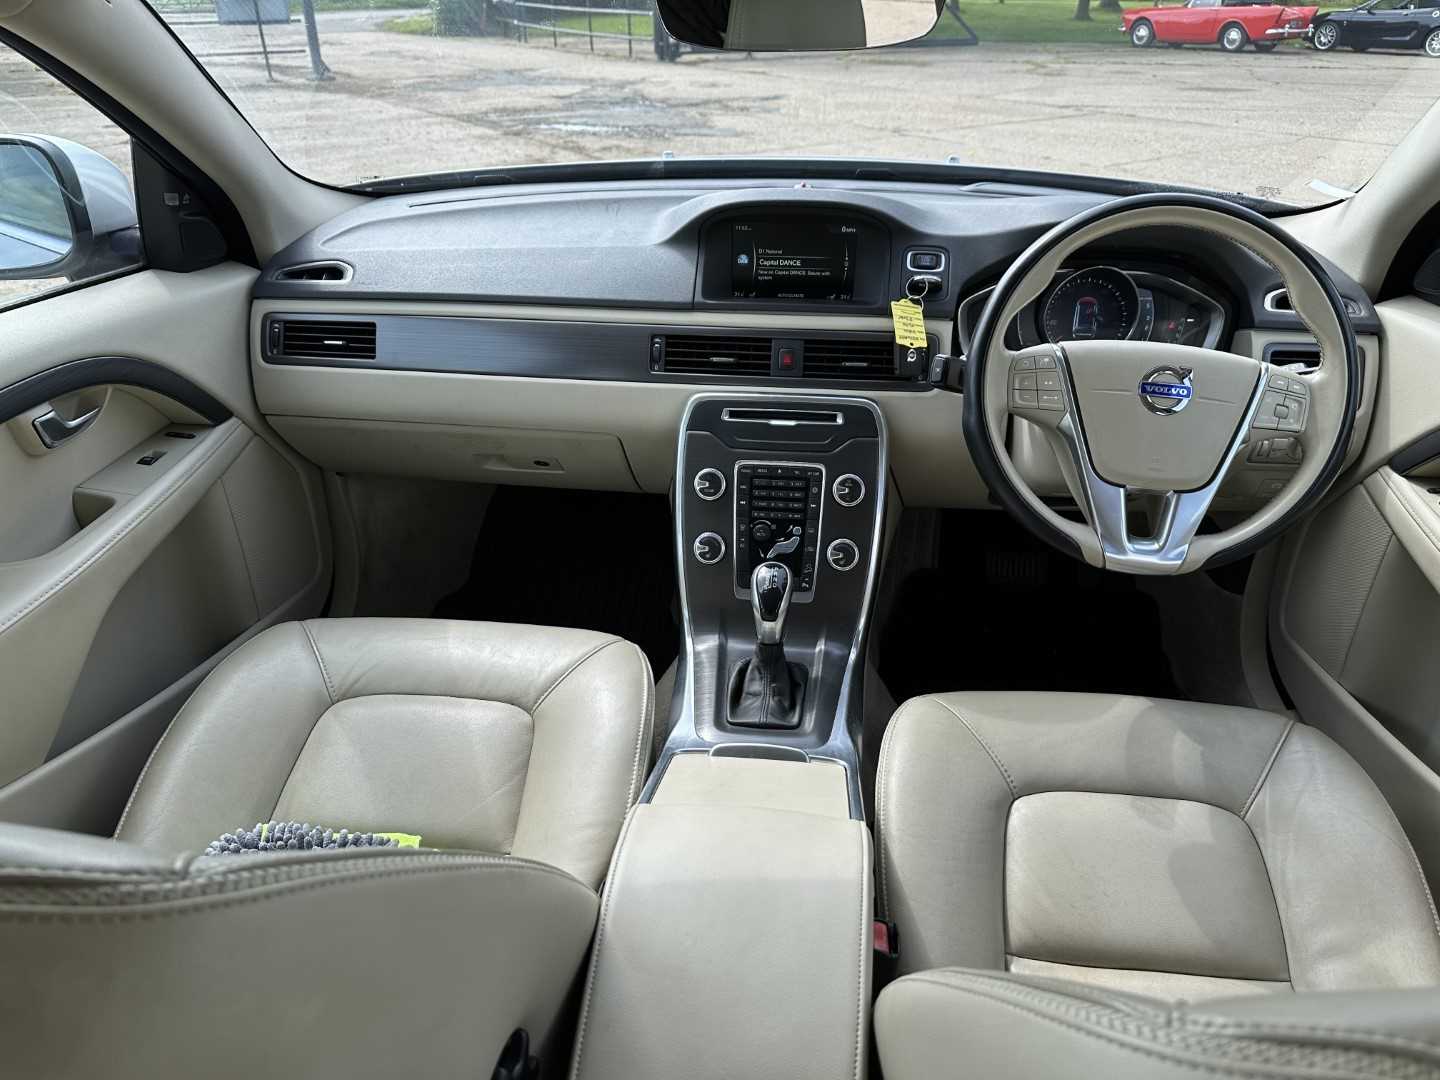 2014 Volvo XC70 SE Lux D5 AWD automatic, 5 door estate, reg. no. KS14 MFP - Bild 26 aus 29